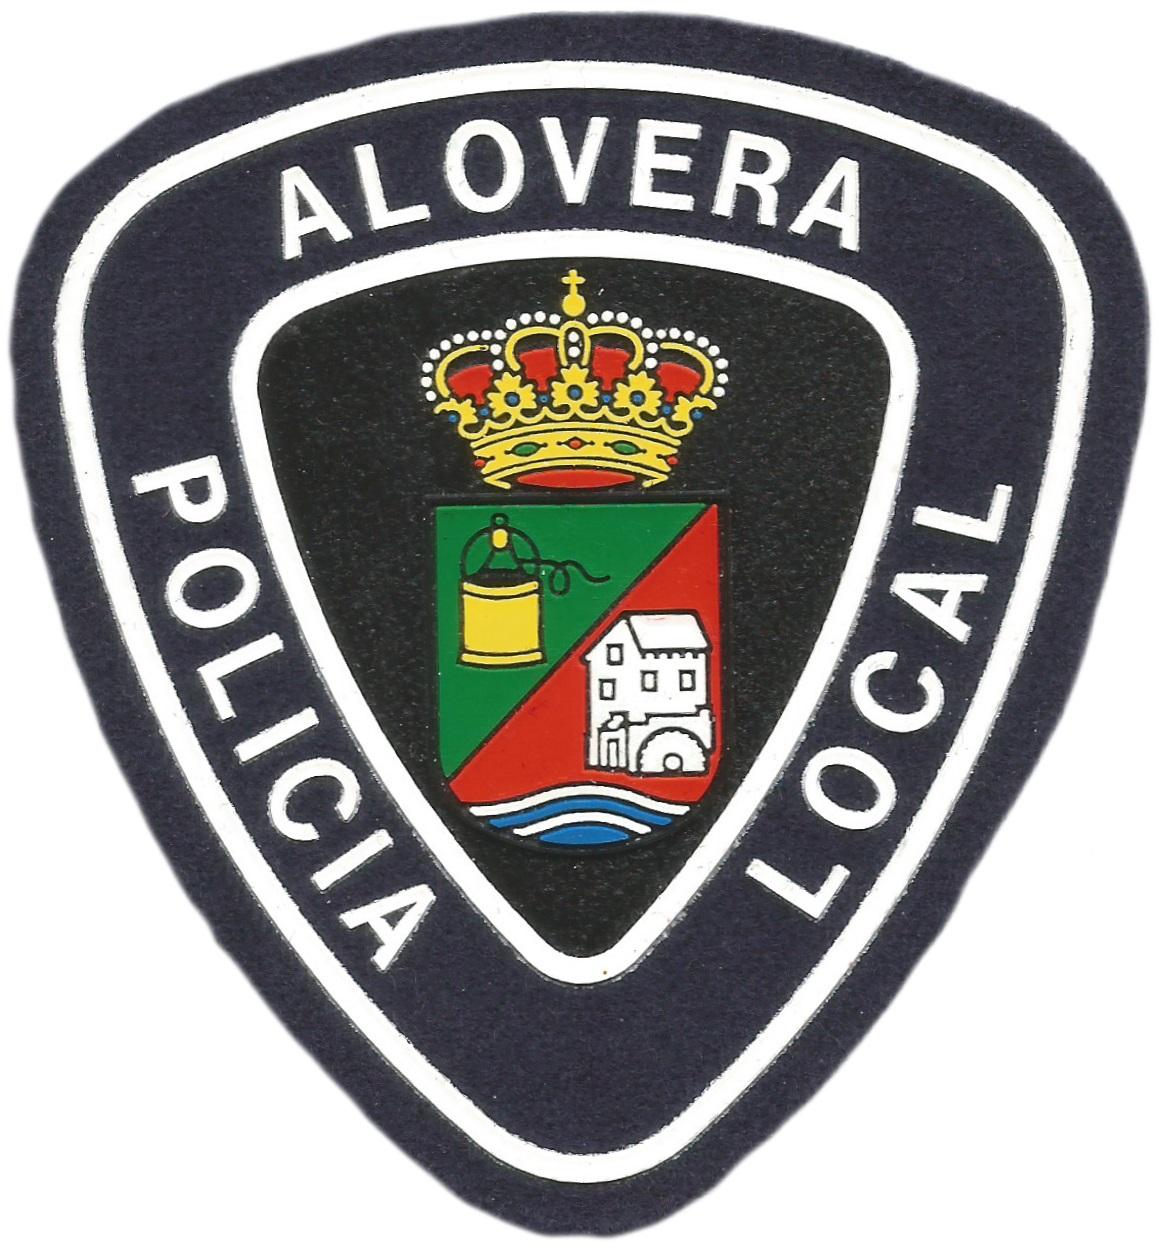 Policía Local Alovera parche insignia emblema distintivo Castilla la Mancha